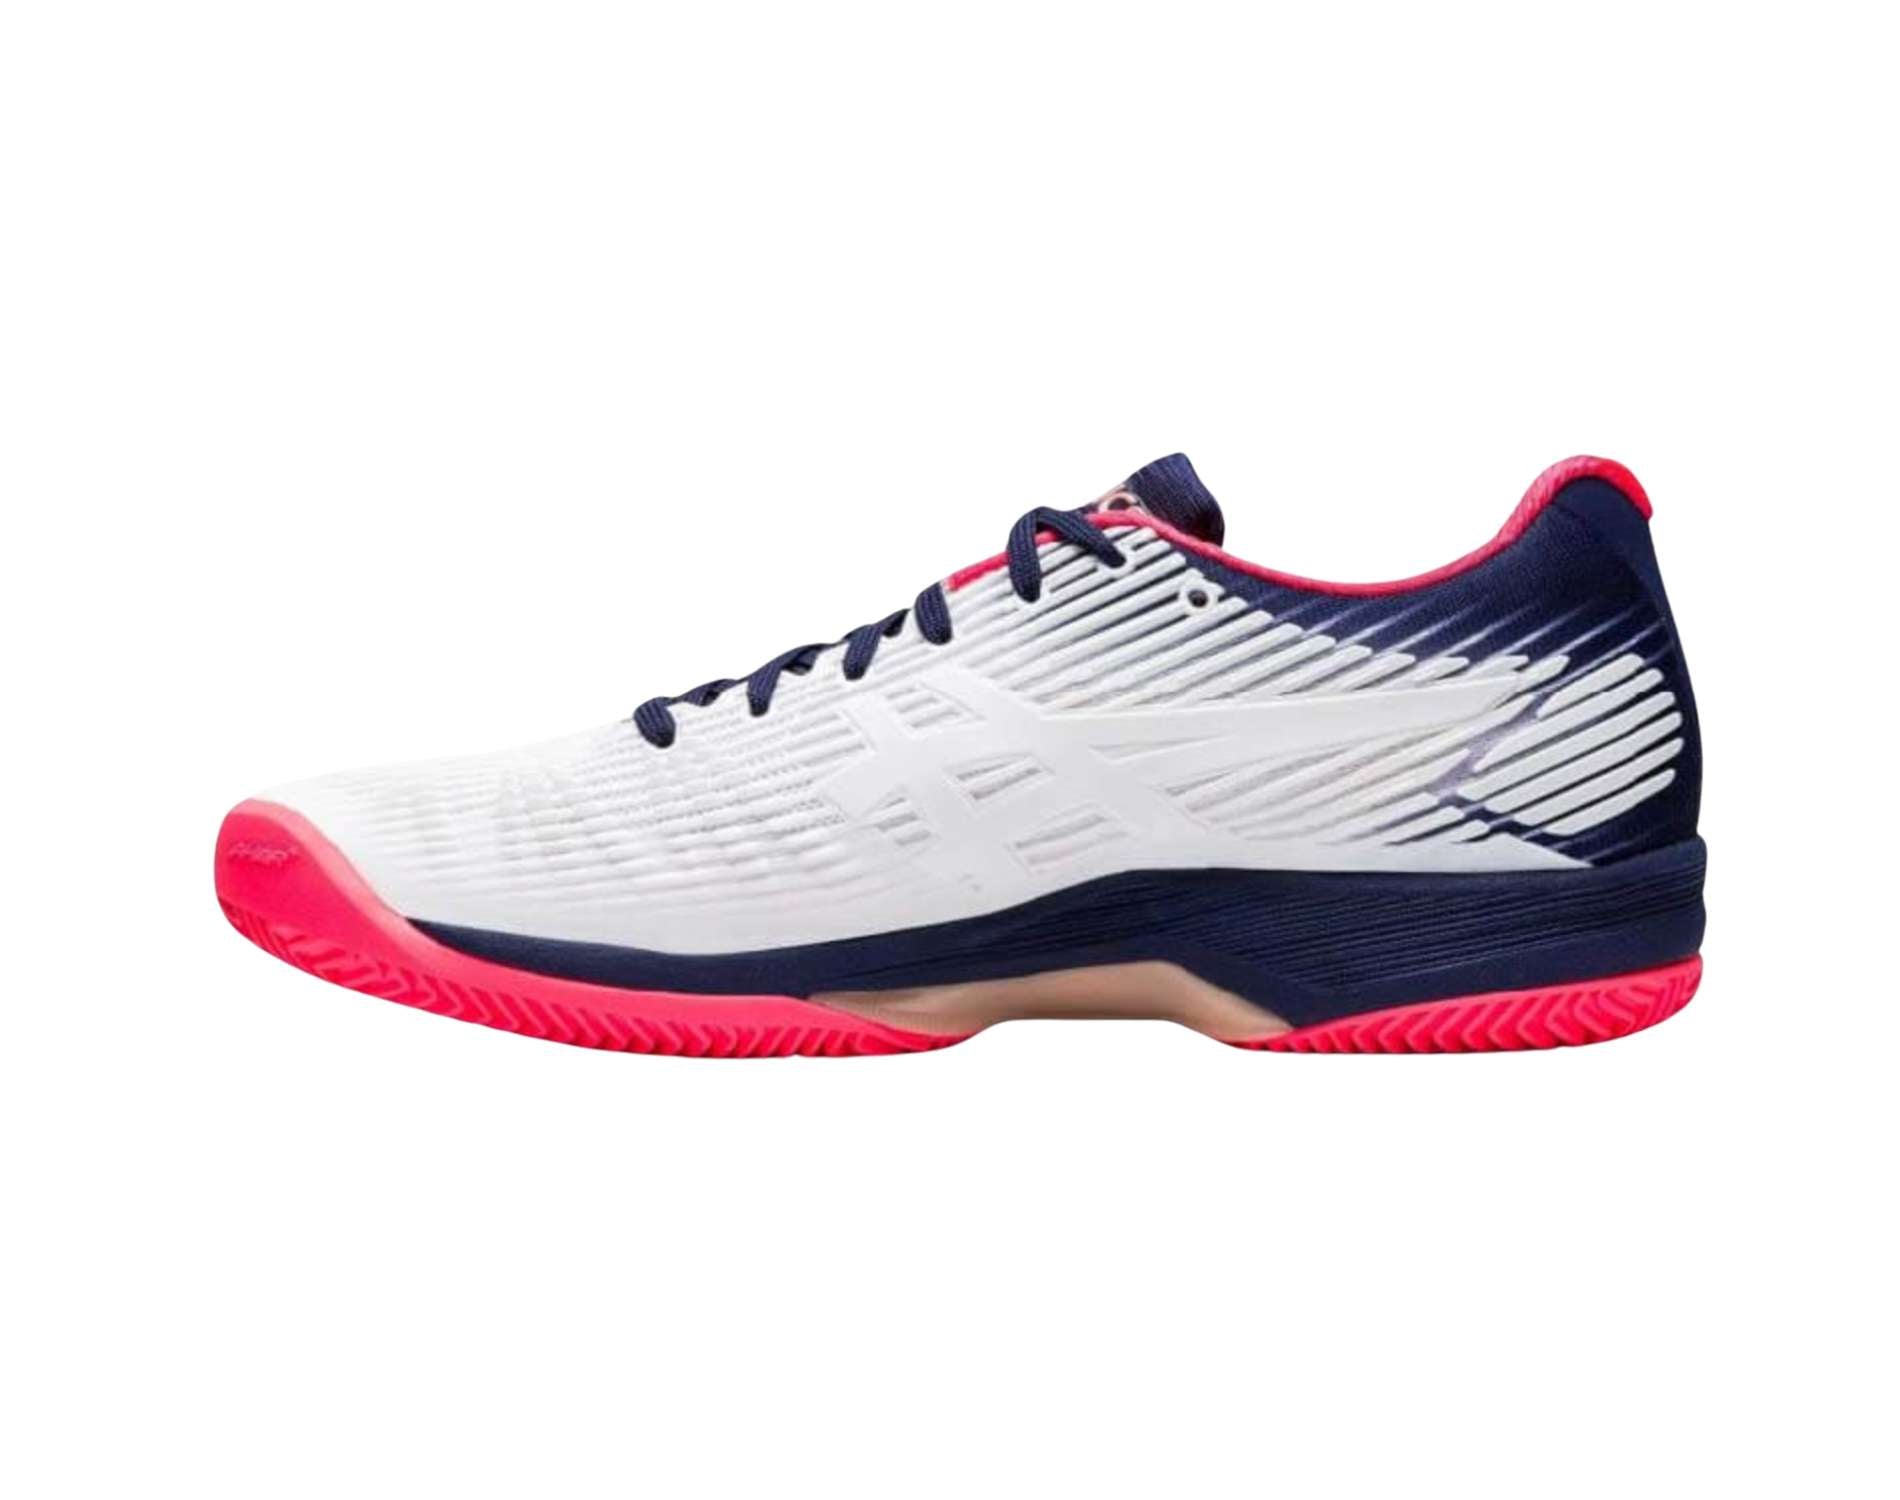 Asics Solution Speed ff women's tennis shoe in white navy pink SKU 4550215800866